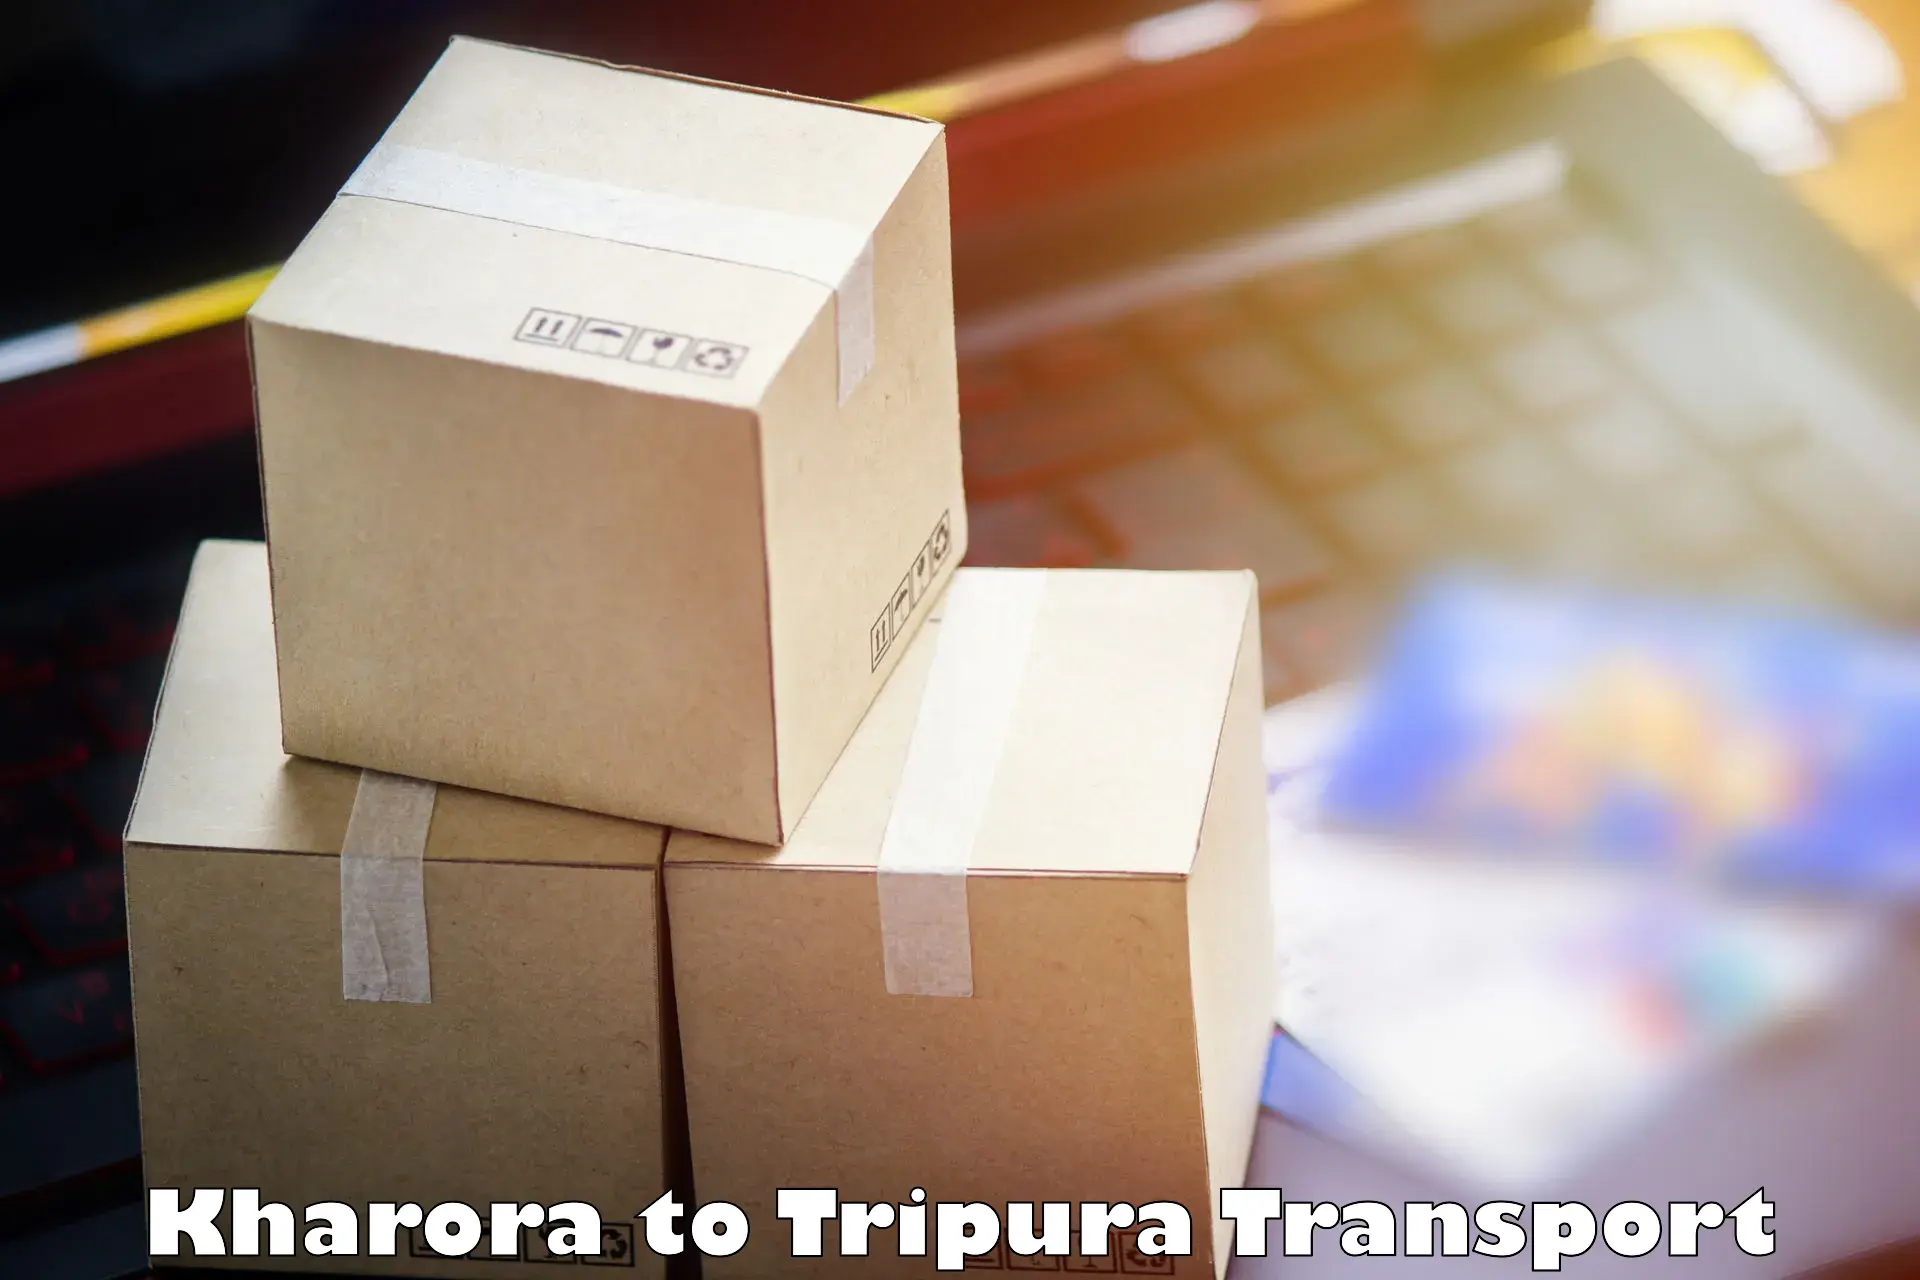 Truck transport companies in India Kharora to Tripura